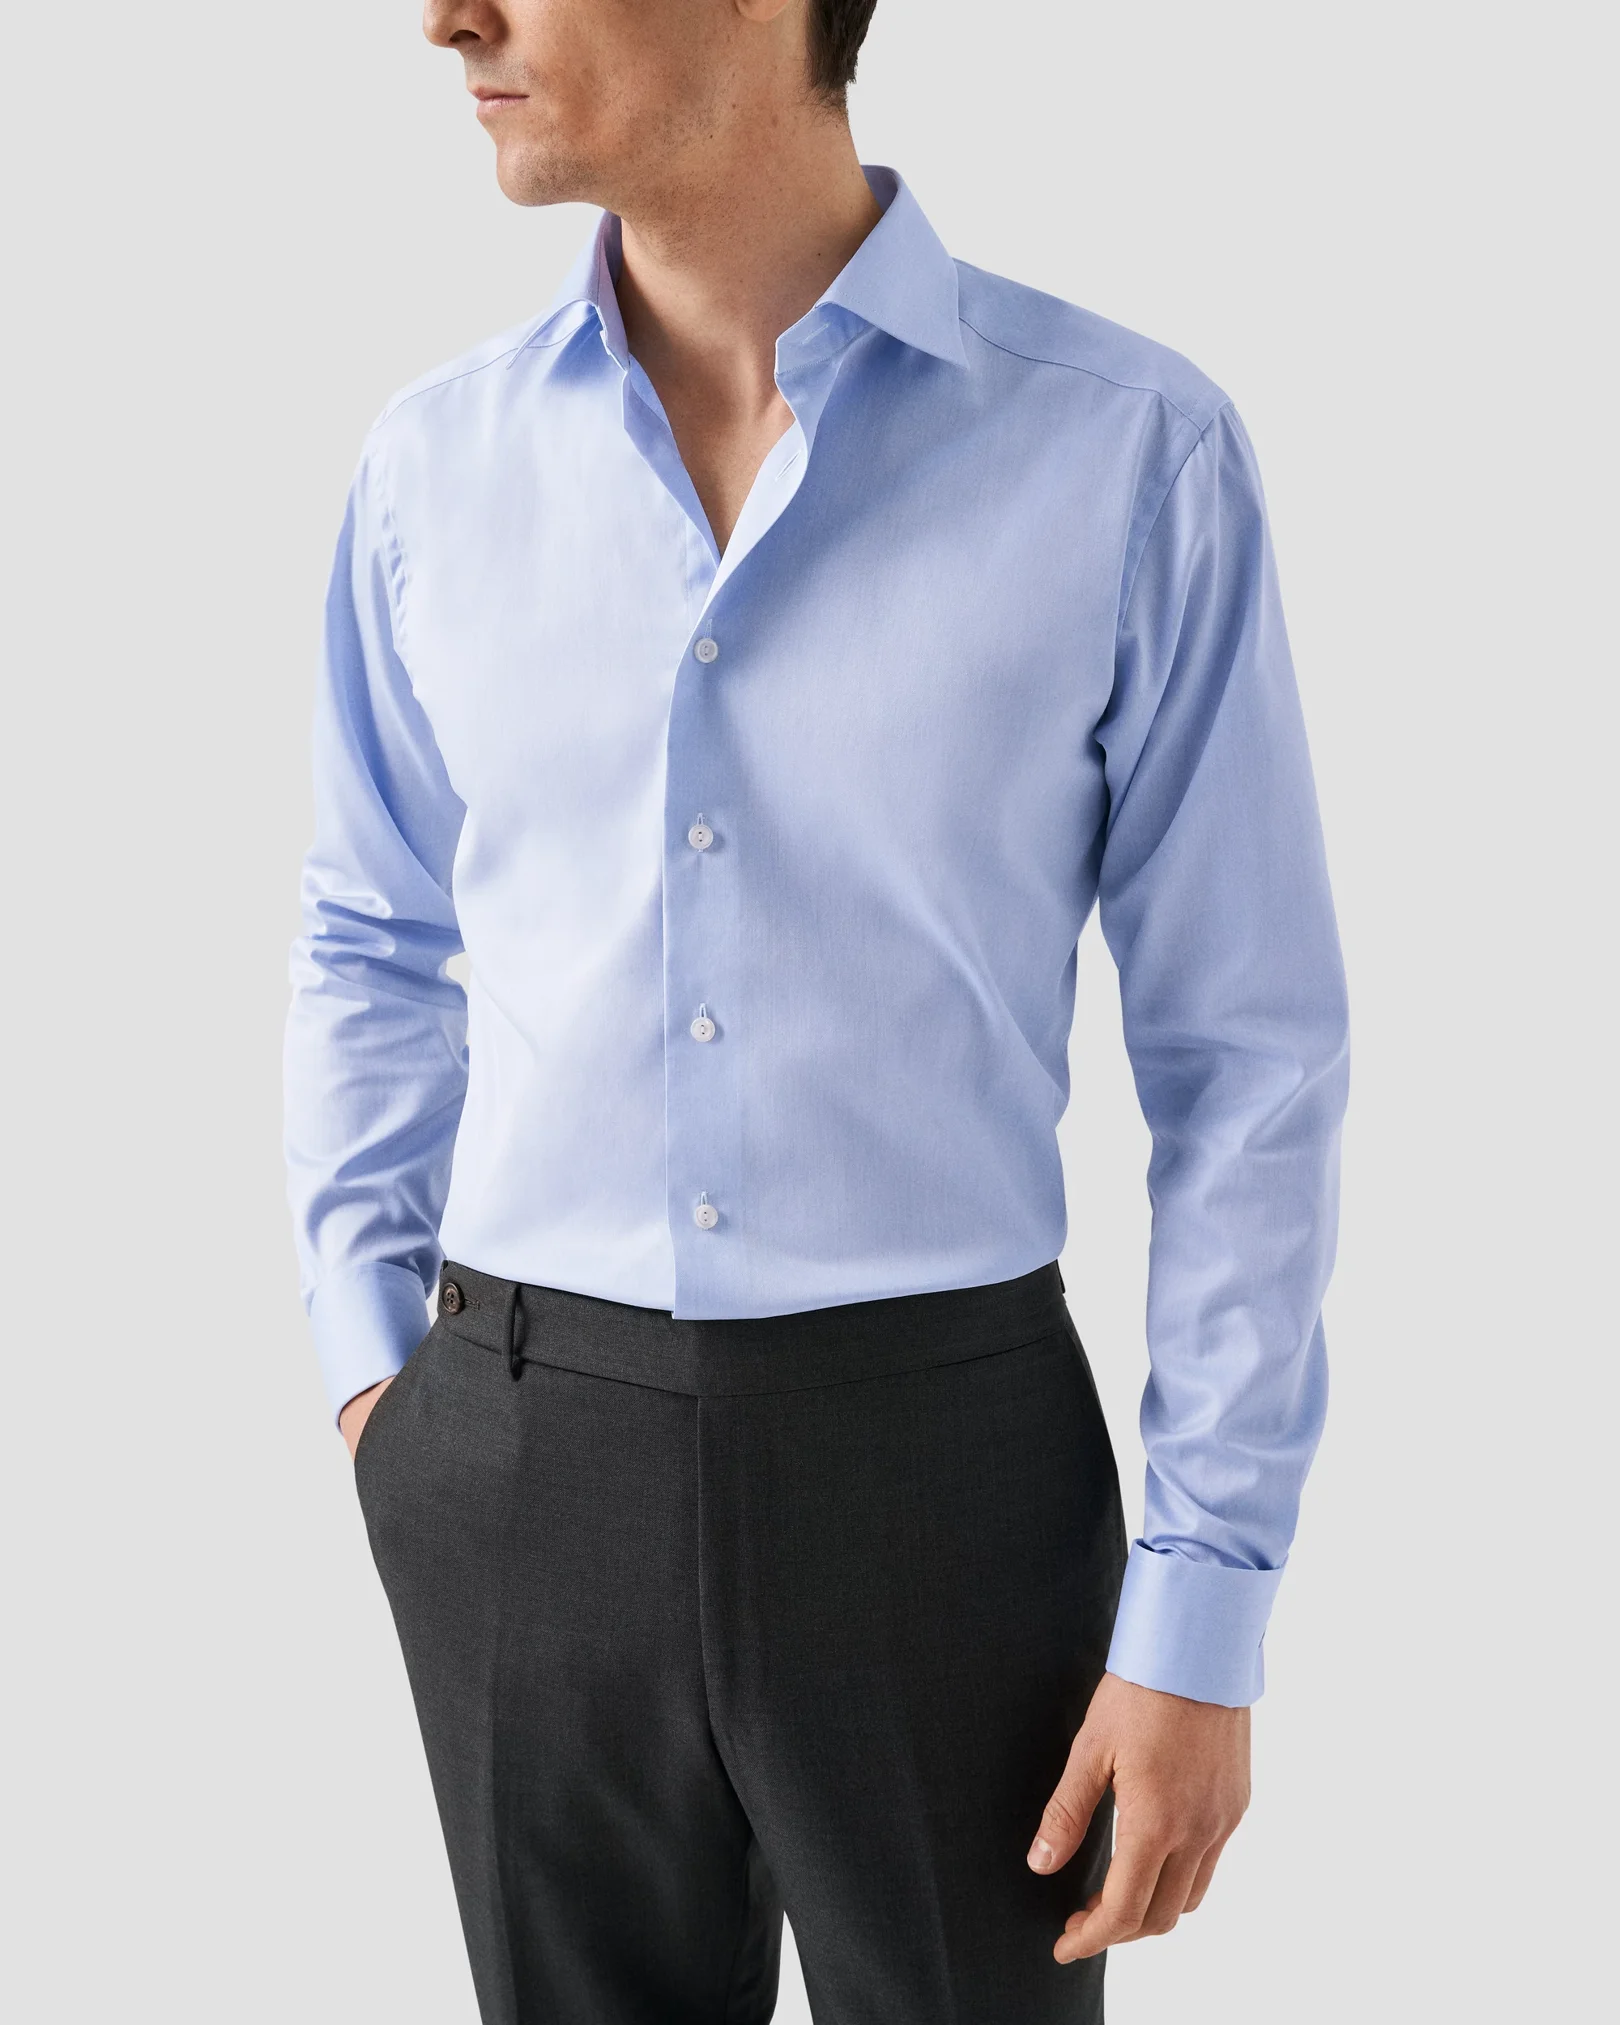 Eton - light blue french cuff shirt